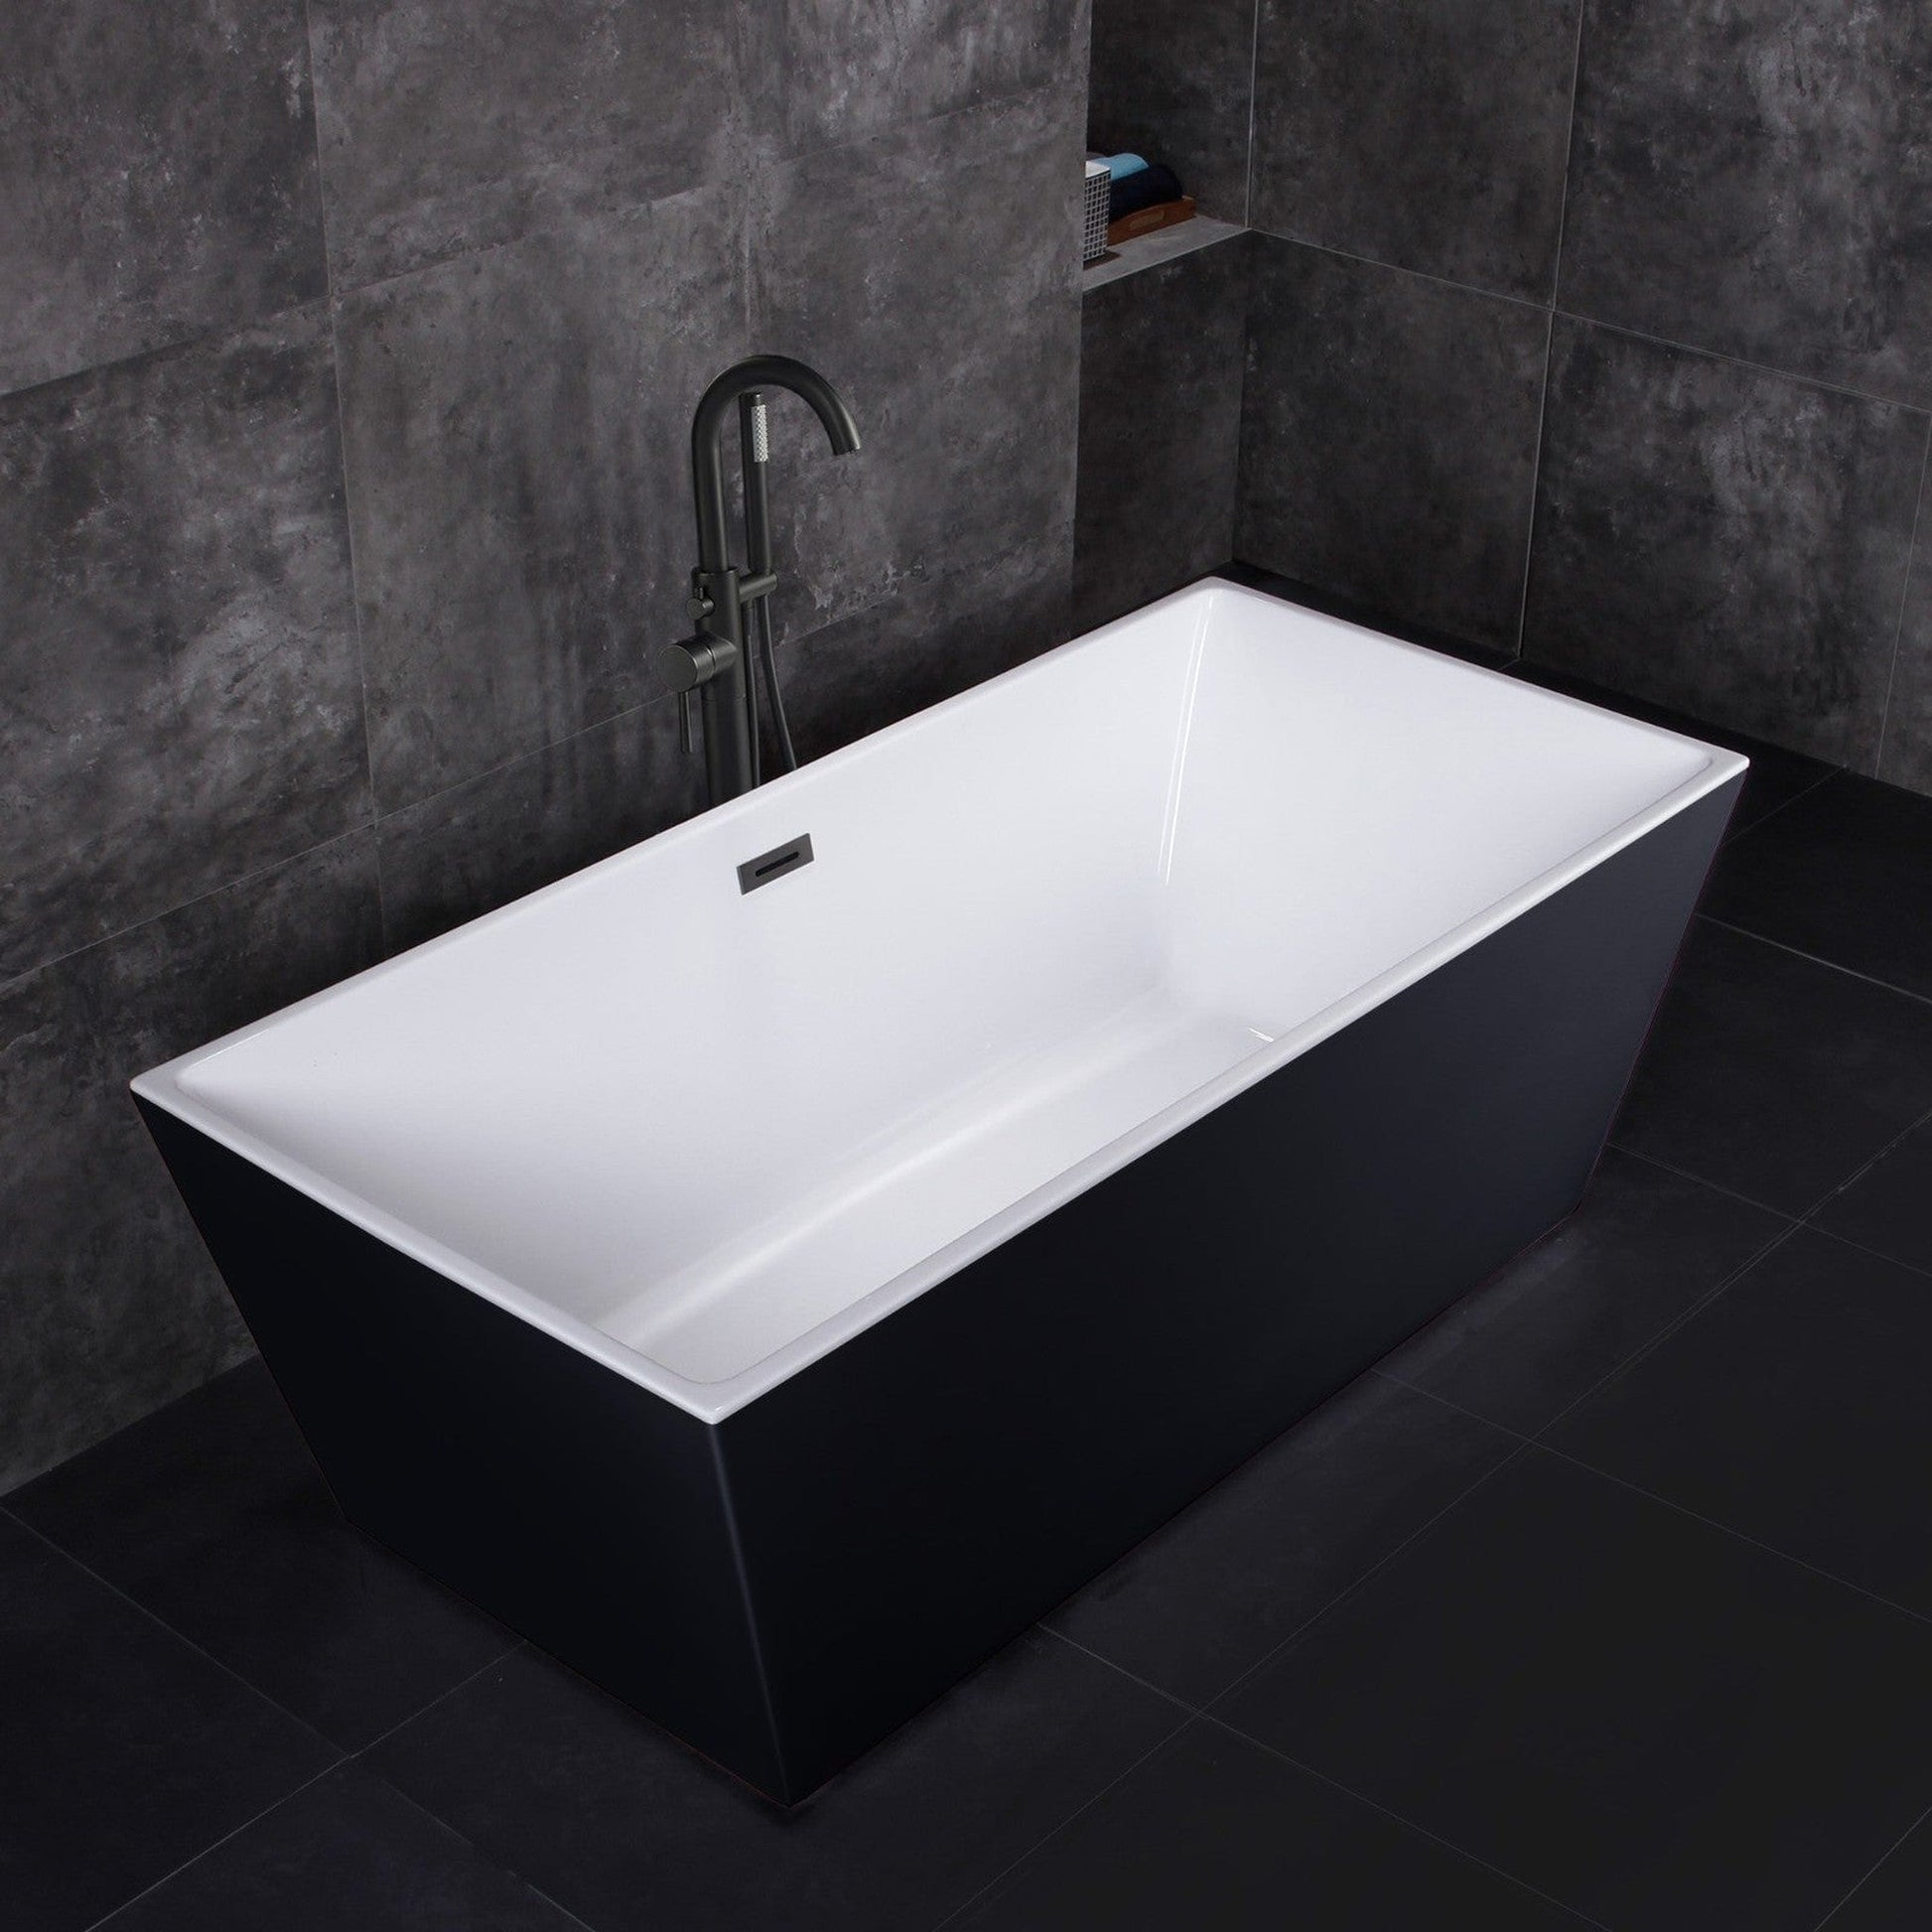 WoodBridge BTA1812 67" Black Acrylic Freestanding Soaking Bathtub With Matte Black Drain, Overflow, F0072MBVT Tub Filler and Caddy Tray